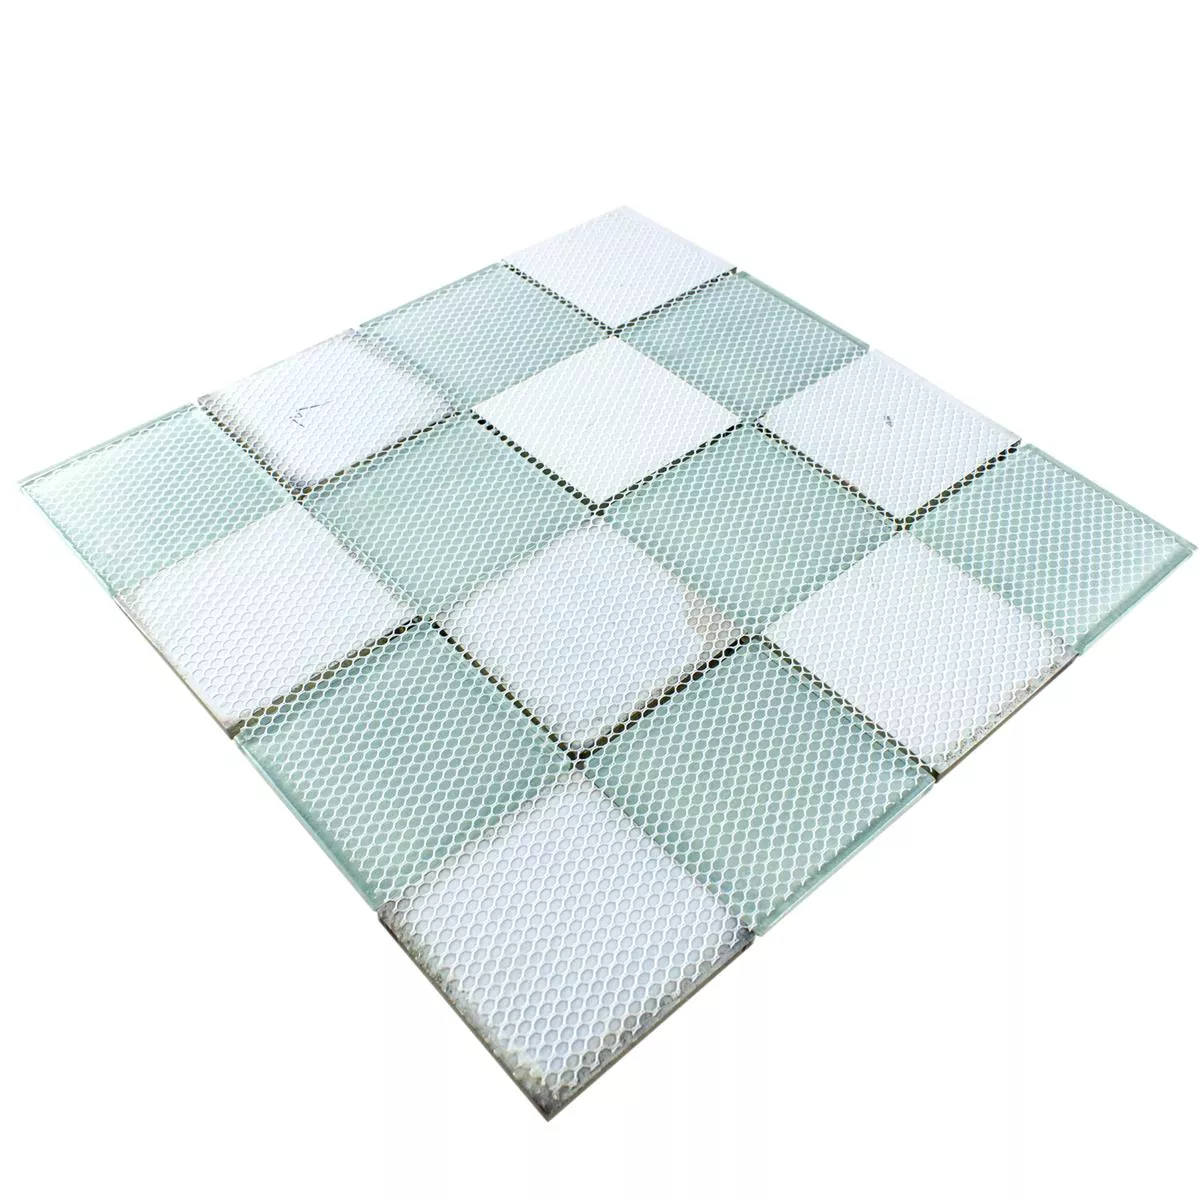 Glass Mosaic Tiles Cement Optic Granada Beige